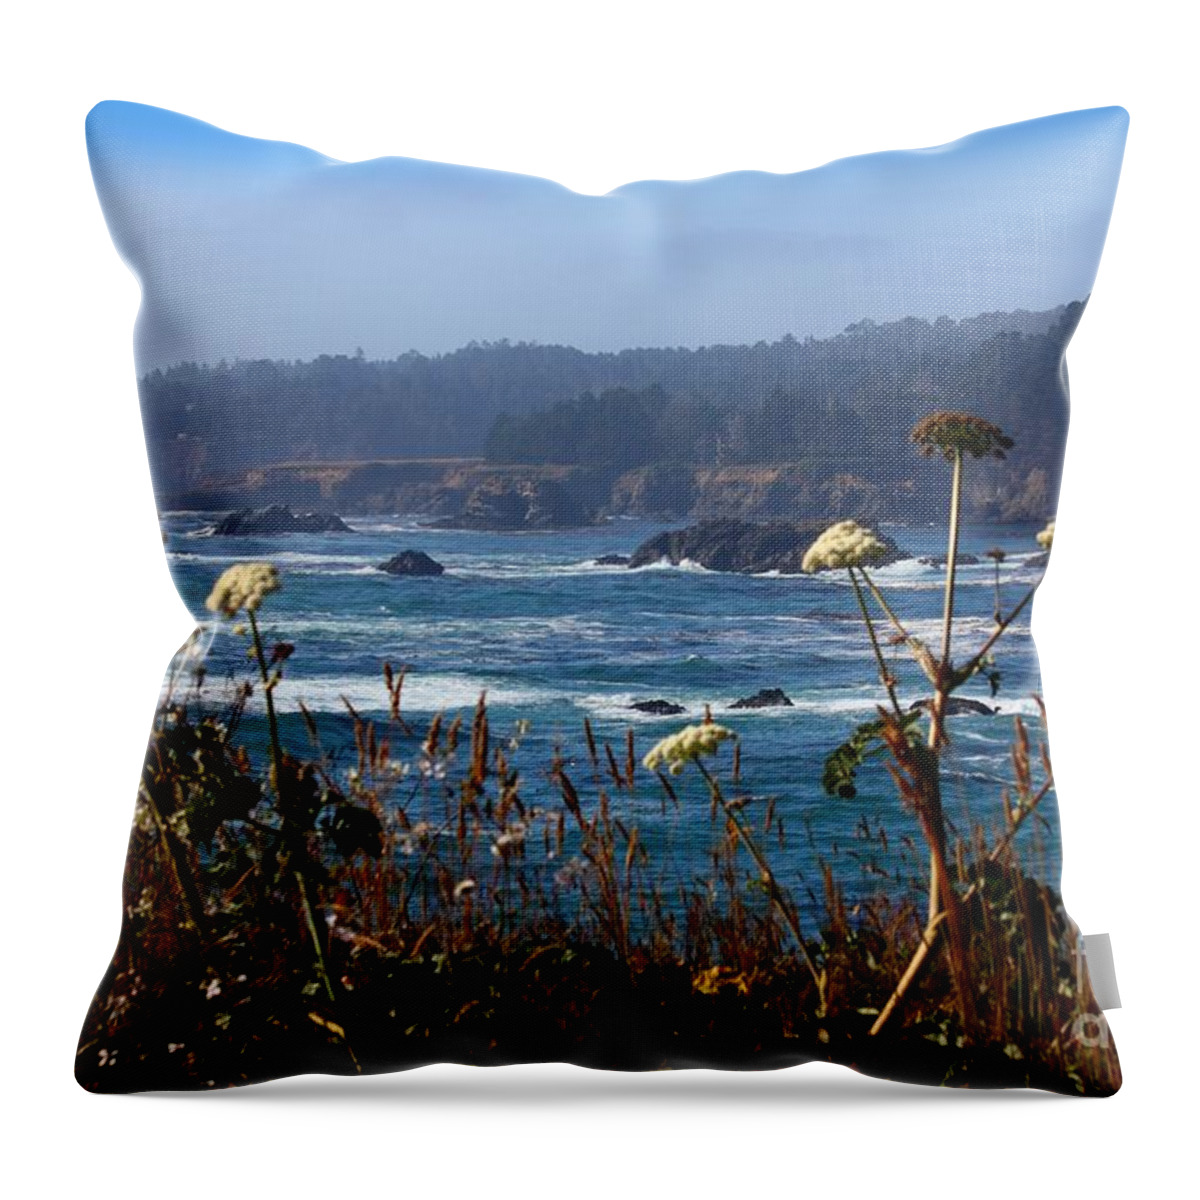 Mendocino Coast Throw Pillow featuring the photograph Mendocino Coast by Patrick Witz